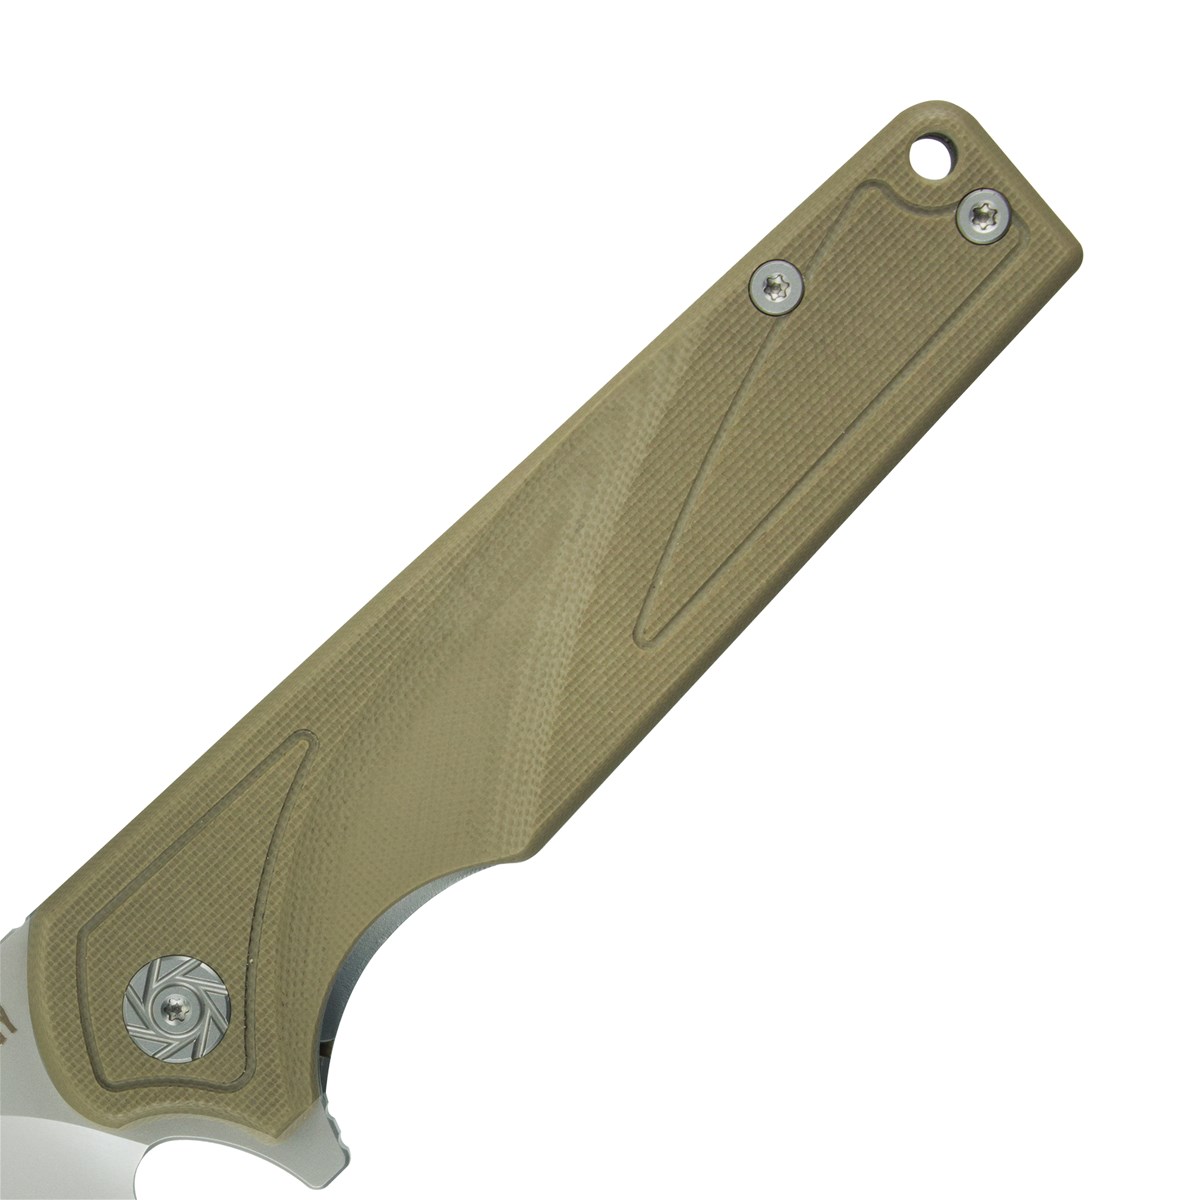 Kubey D2 Steel Folding Knife G10 Handle Liner Lock Ceramica Ball Bearing Outdoor Survival Hiking Knife KU233